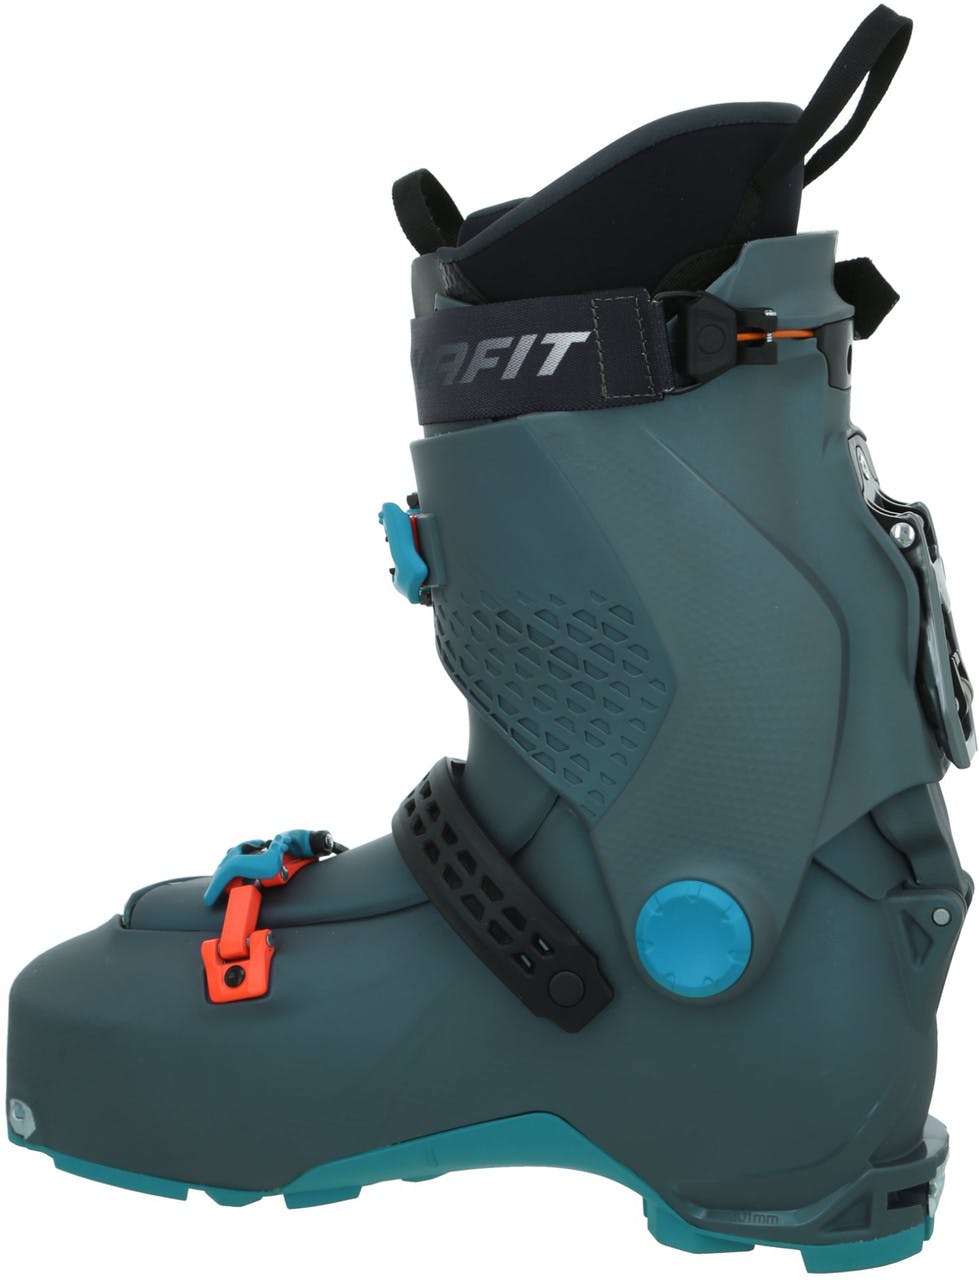 Hoji Pro Tour Ski Boots Asphalt/Hibiscus